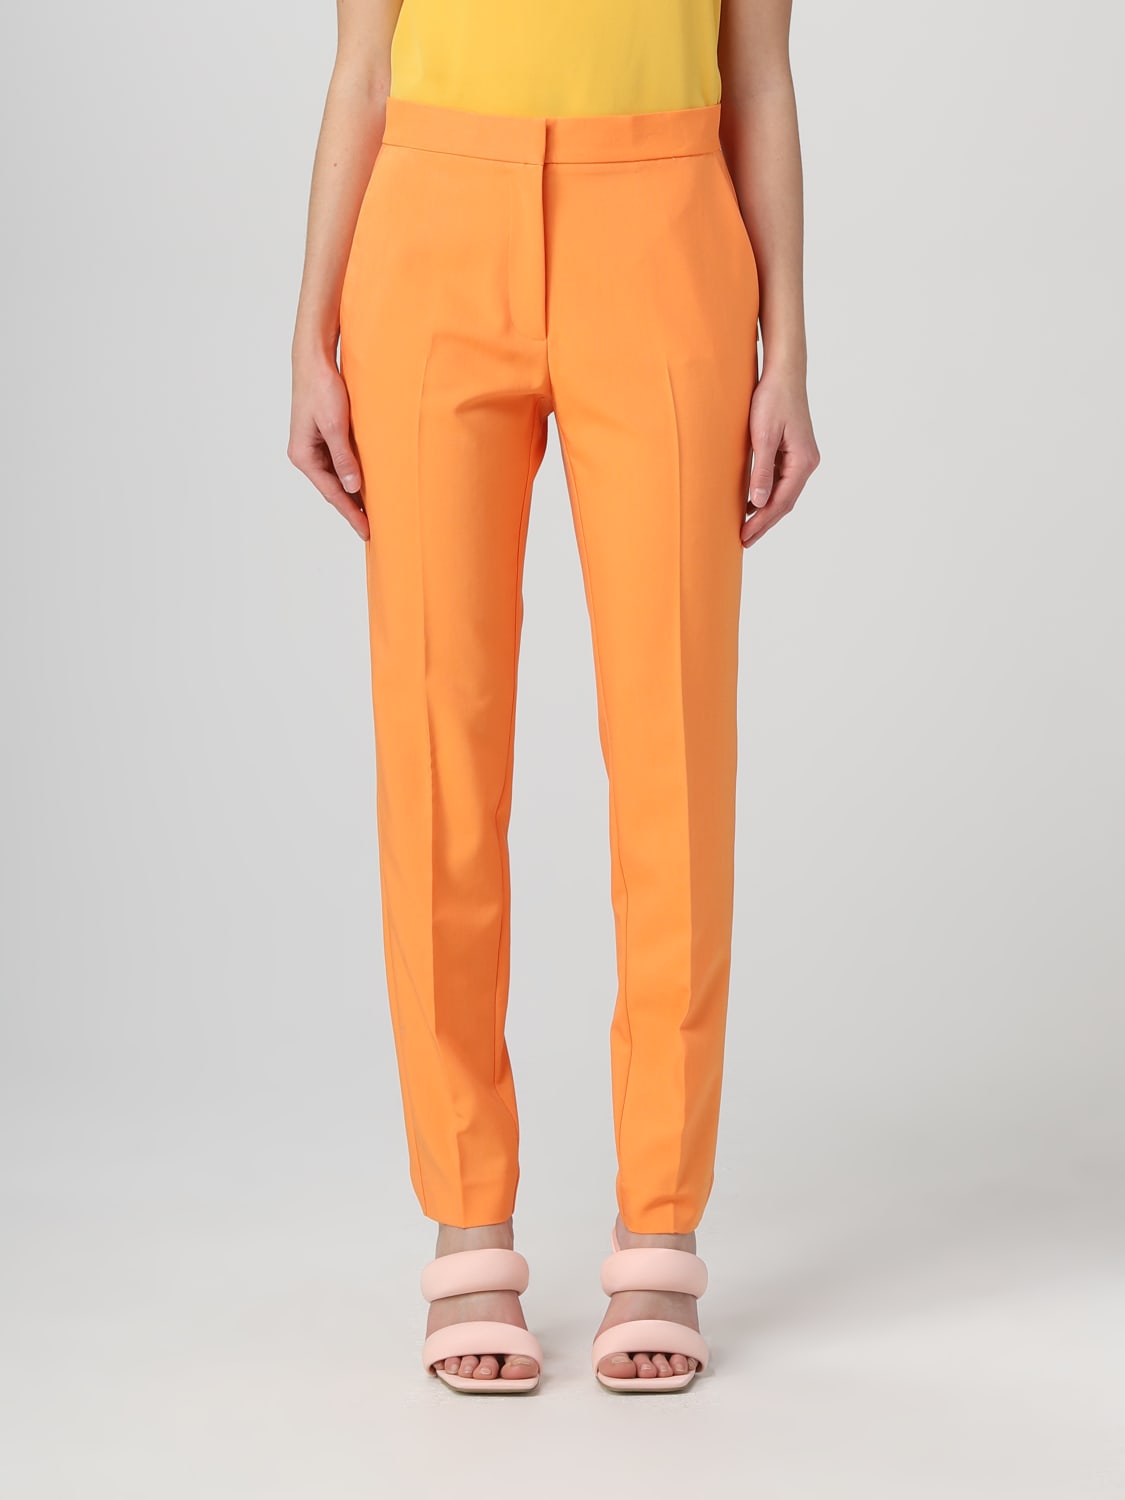 Pantalone Actitude Twinset: Pantalone a Twinset - Actitude in misto viscosa arancione 2